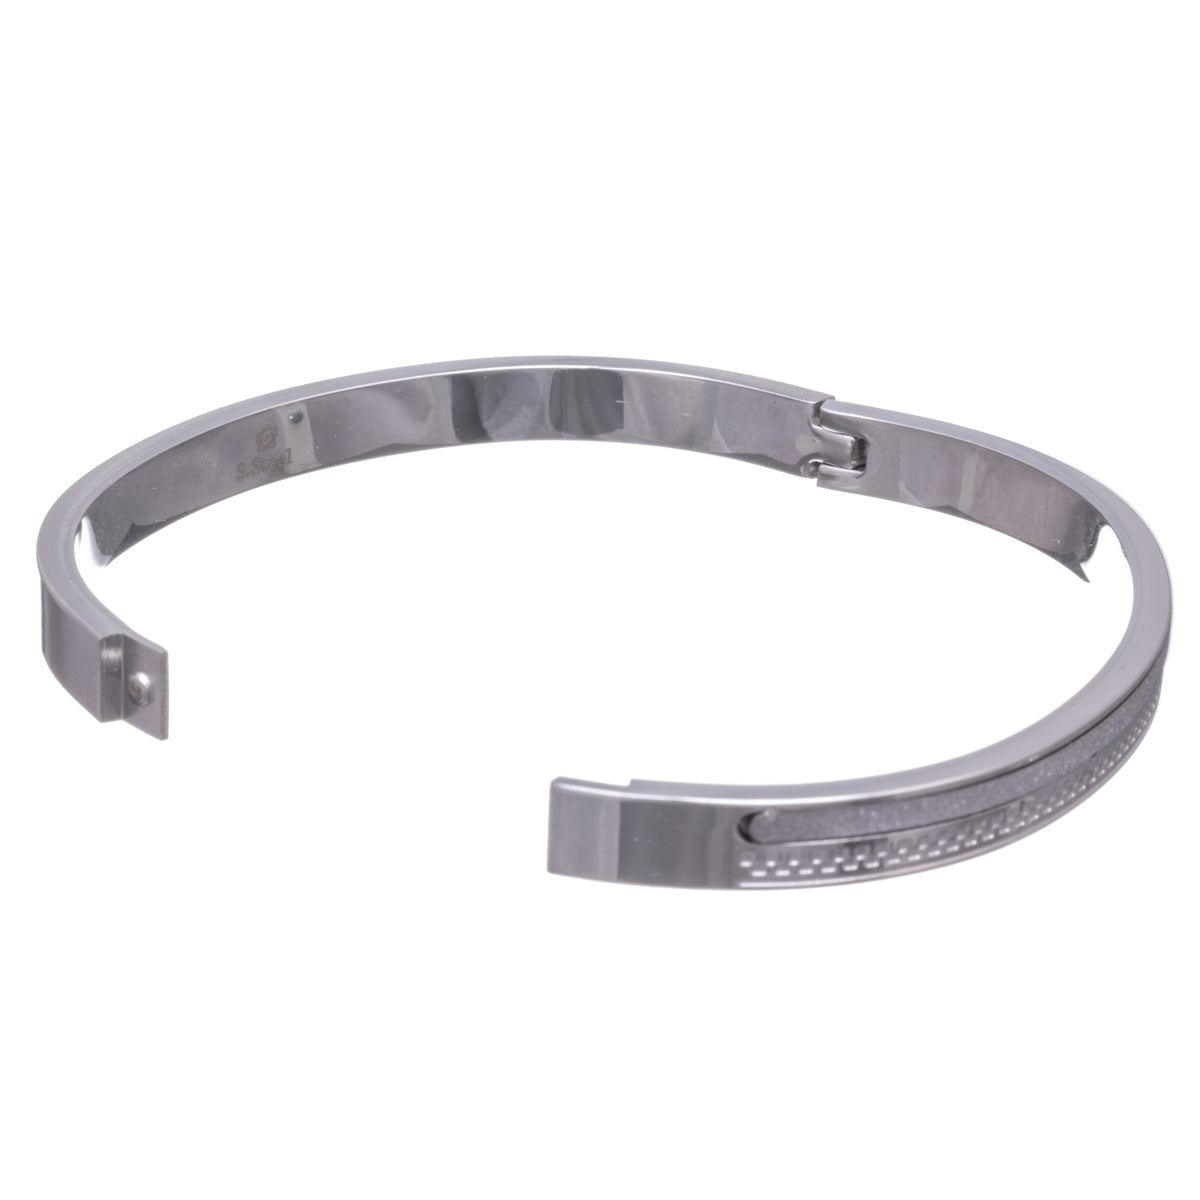 Decorated steel bracelet with hinge